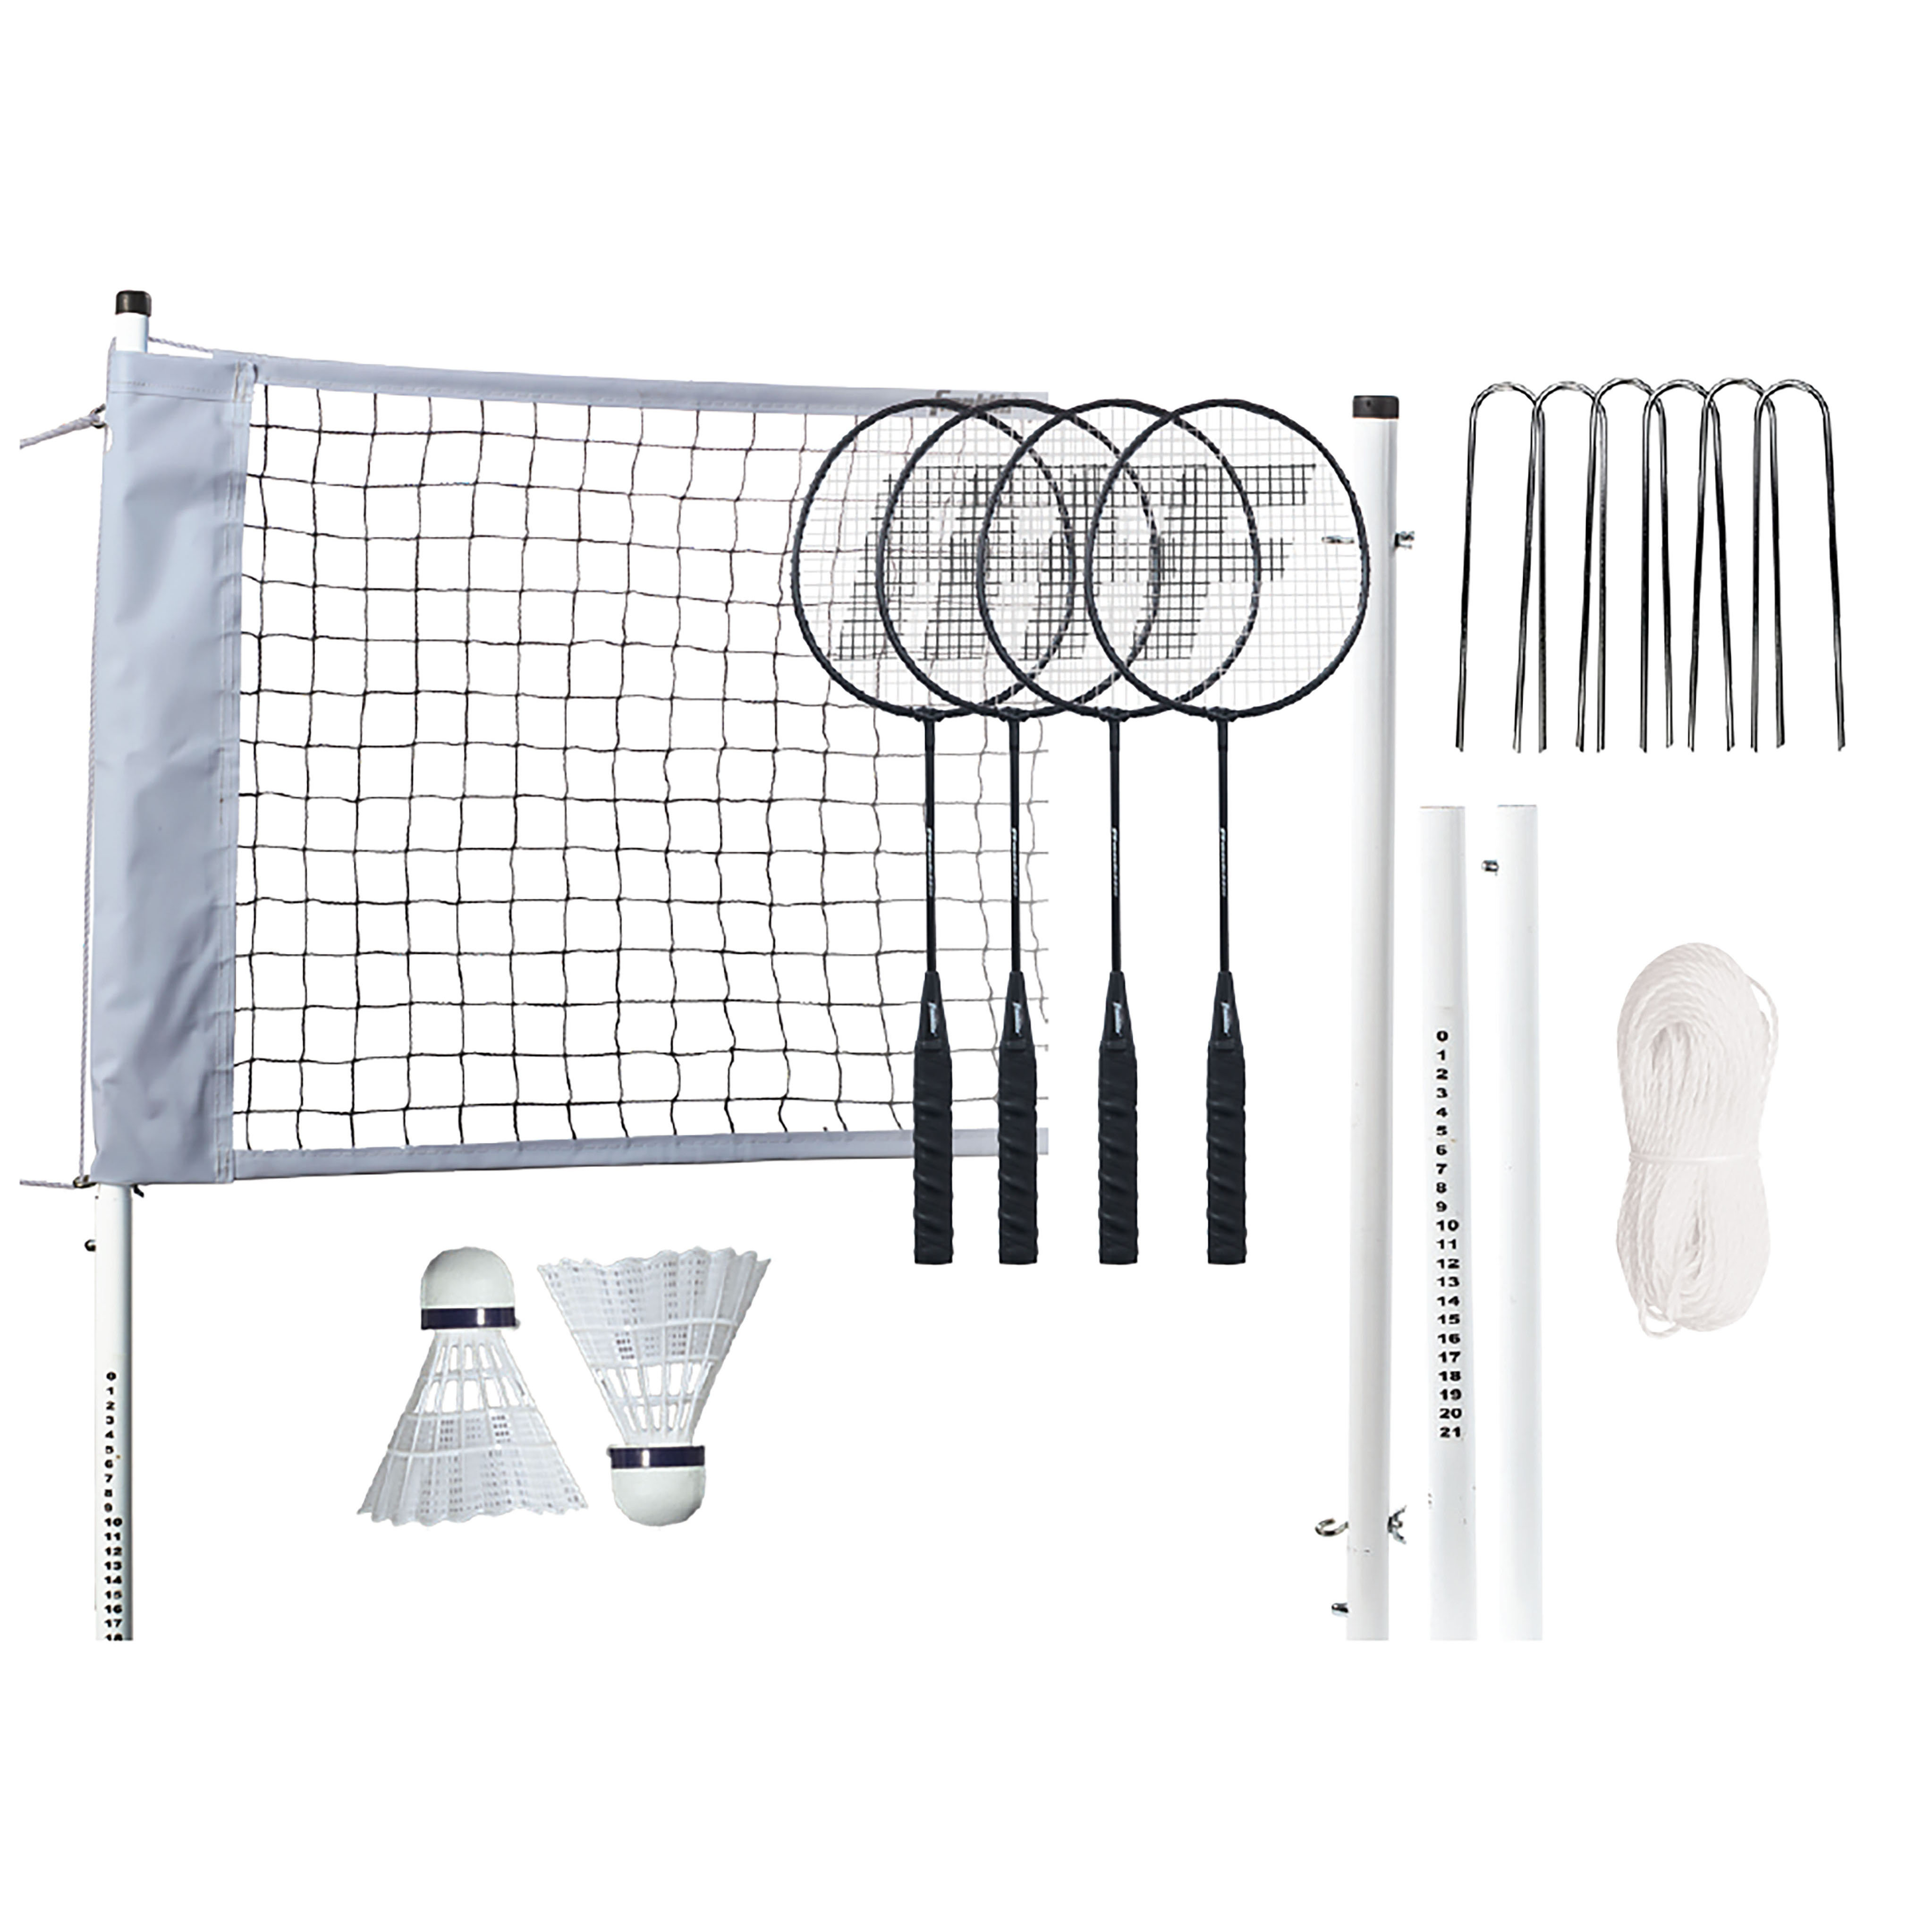 Franklin Sports Badminton Net Family Set - Includes 4 Steel Rackets, 2  Birdies, Adjustable Net and Stakes - Backyard or Beach Badminton Set - Easy  Net